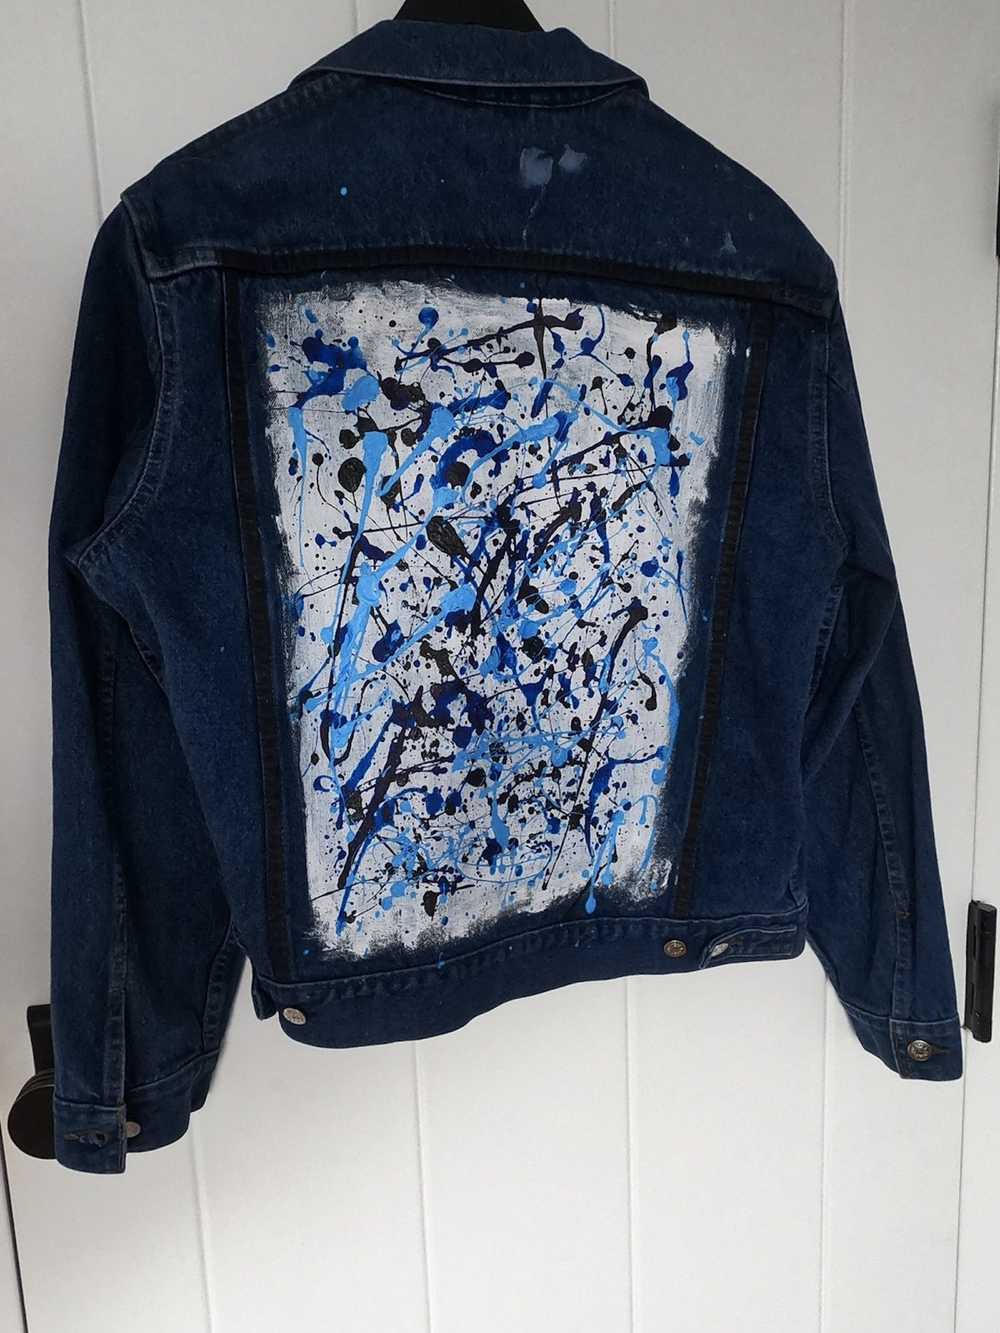 J.Crew Denim jacket - Splatter Painted - image 1